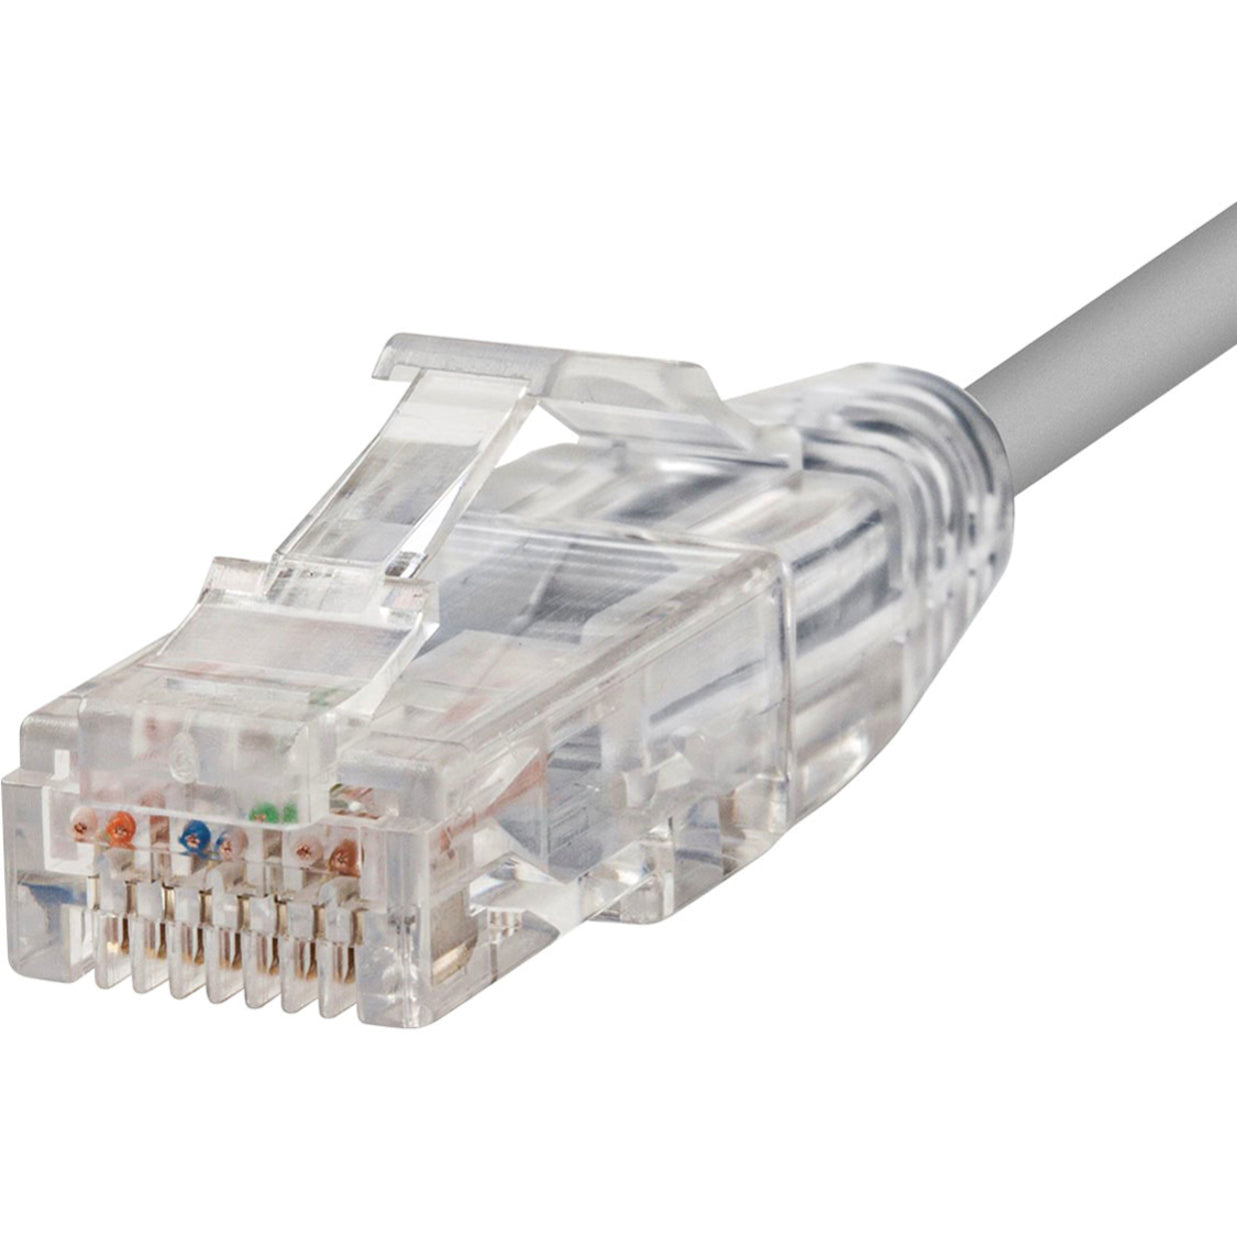 Monoprice 13519 SlimRun Cat6 28AWG UTP Ethernet Network Cable, 1ft Gray, Flexible, Snagless